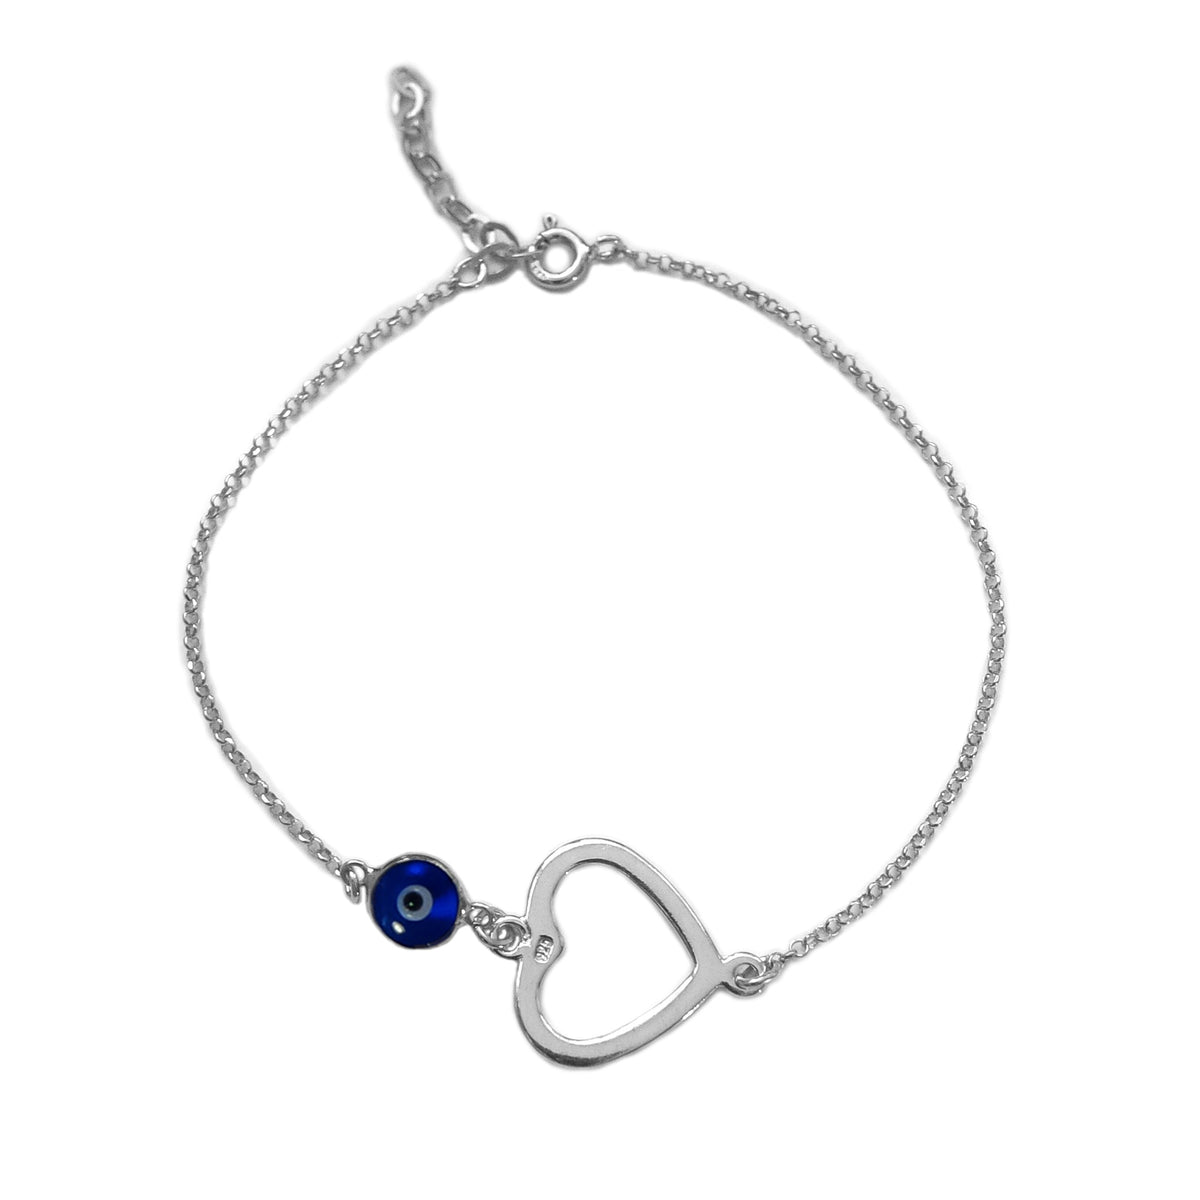 Heart Double Sided Evil Eye Adjustable Bracelet Sterling Silver, 7" to 8.5" fine designer jewelry for men and women